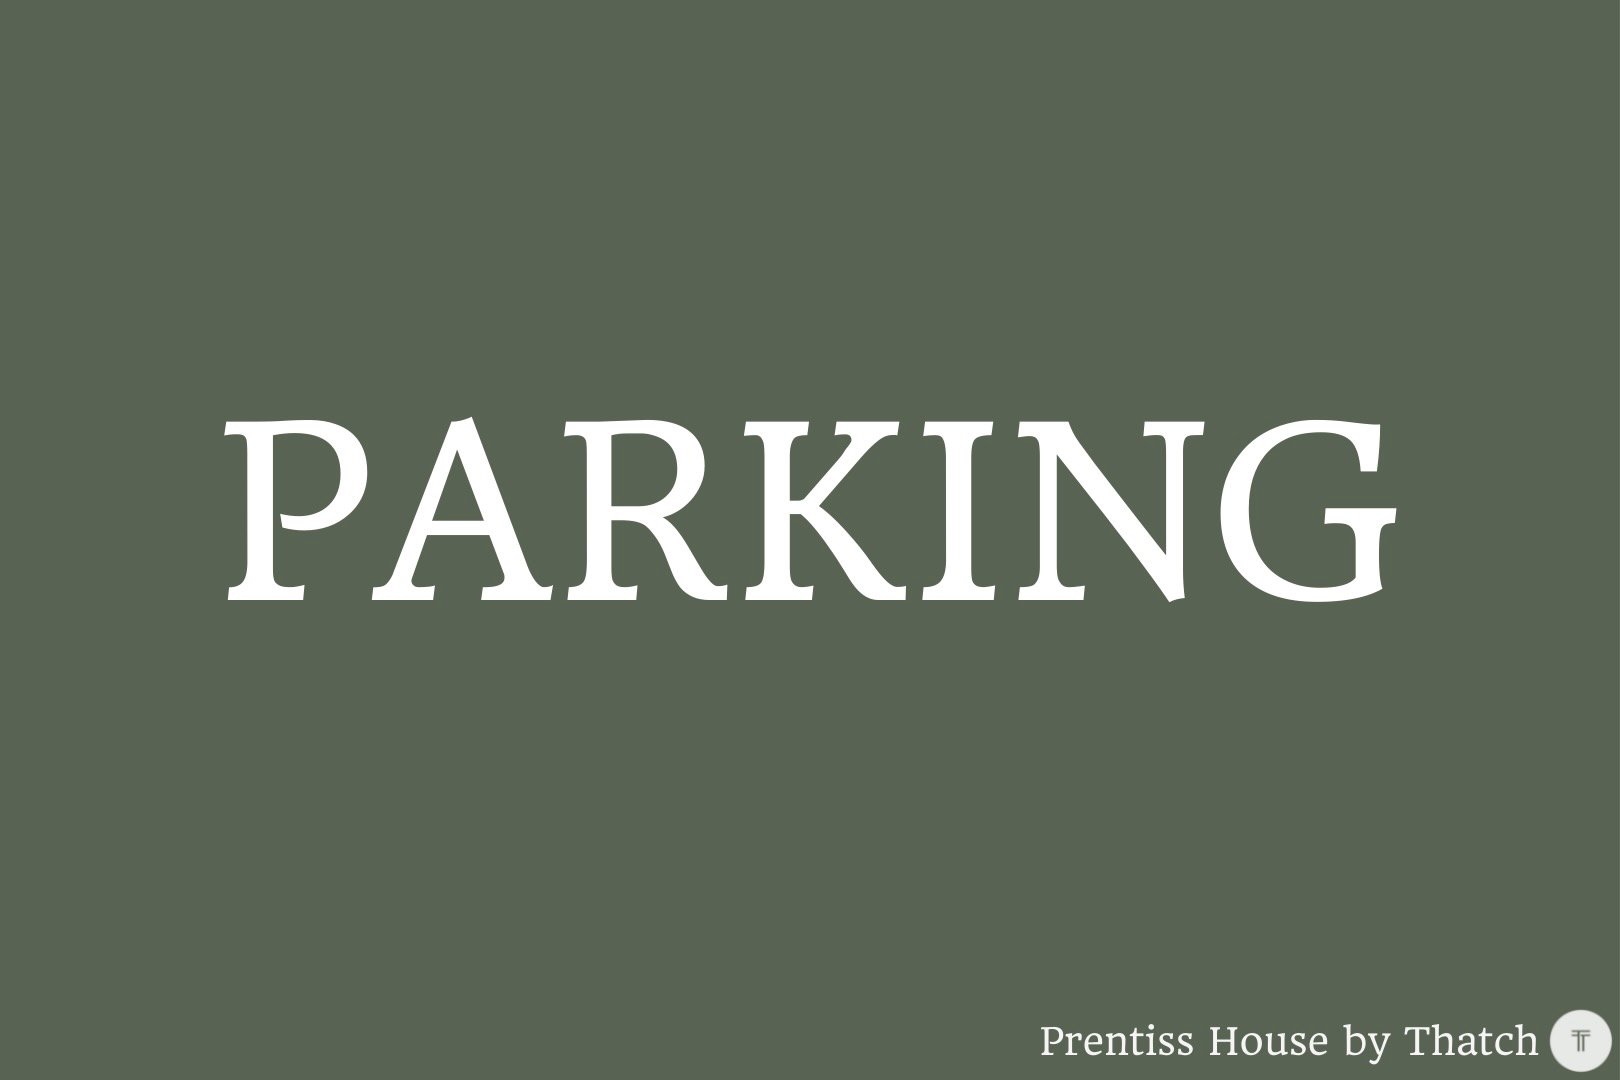 Cambridge, Prentiss House - #3 Parking | Compact